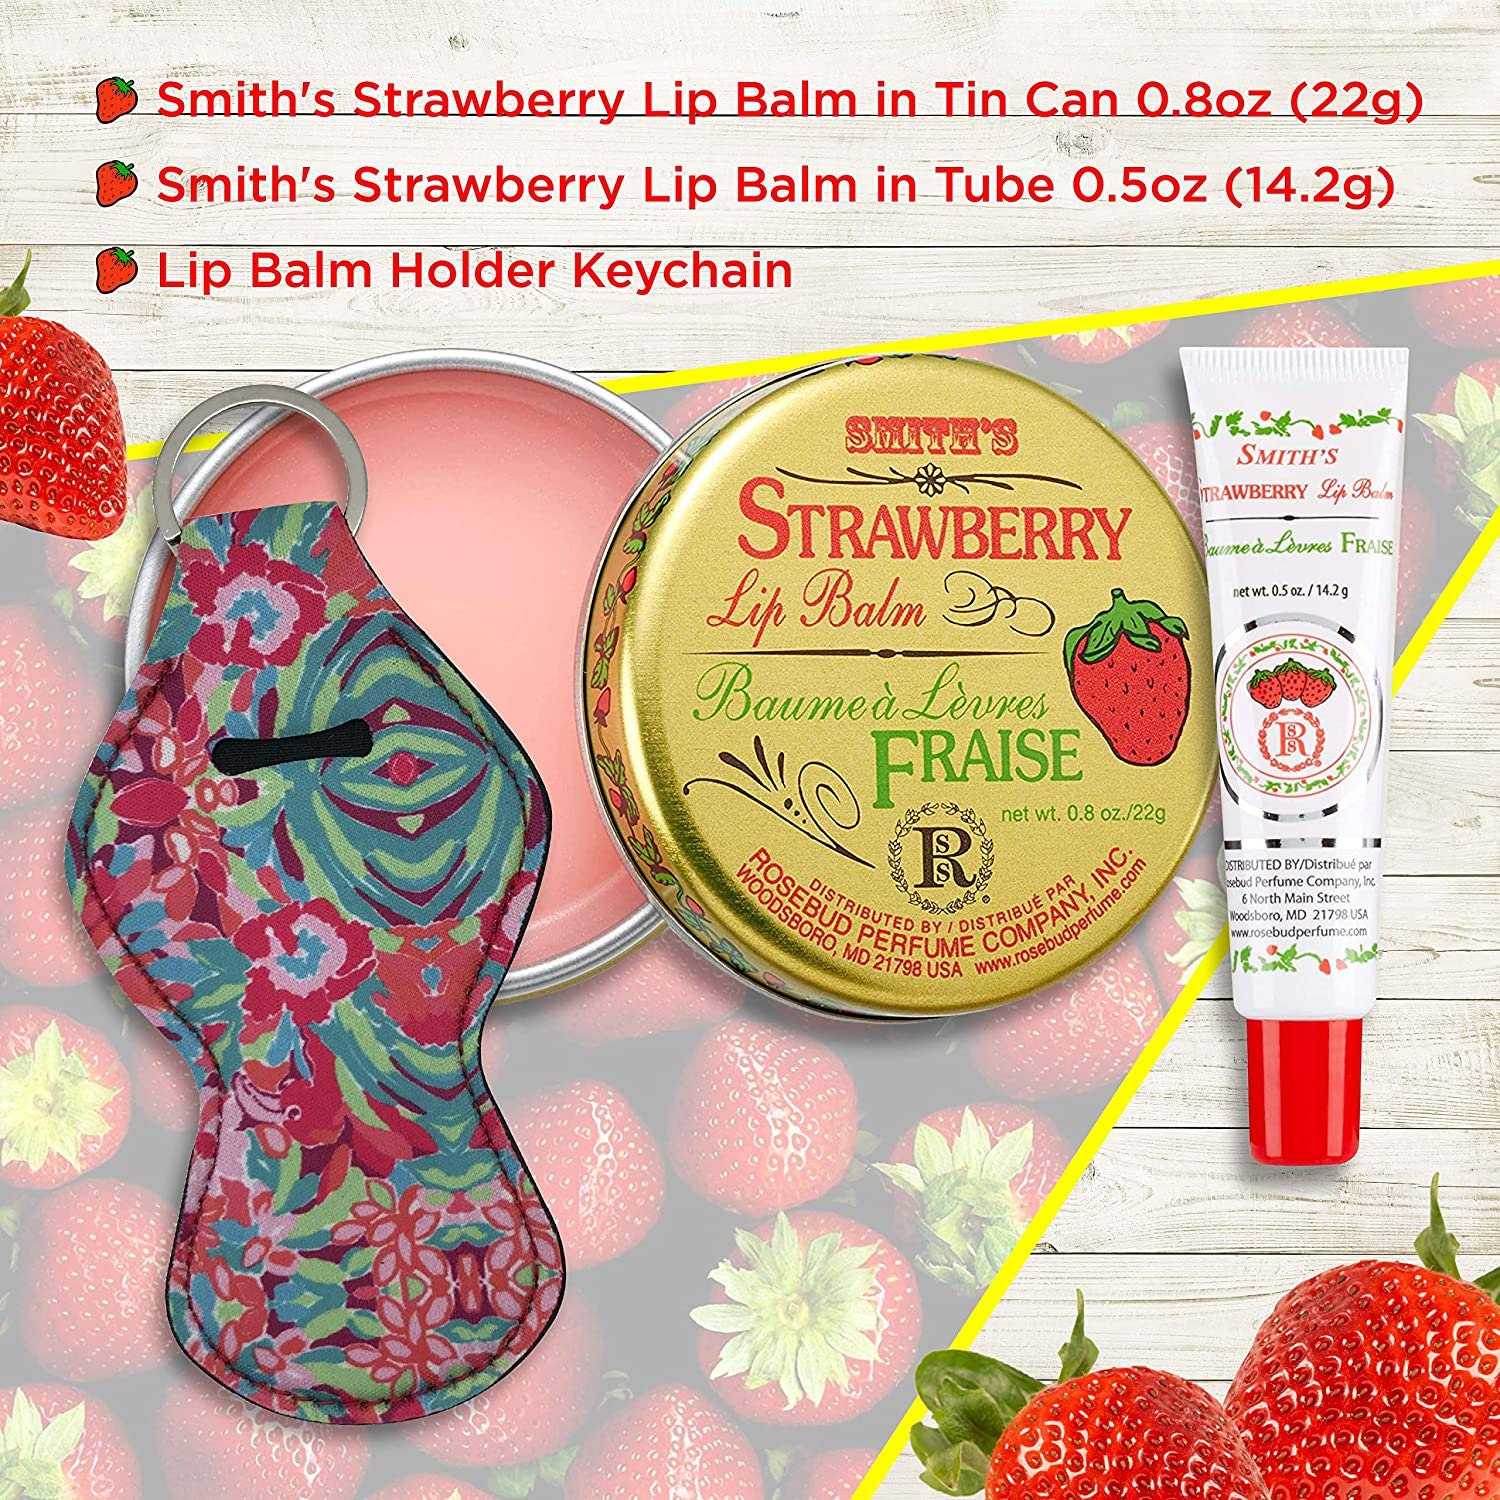 Smiths Strawberry Lip Balm in Tin Can 0.8oz 22g pic